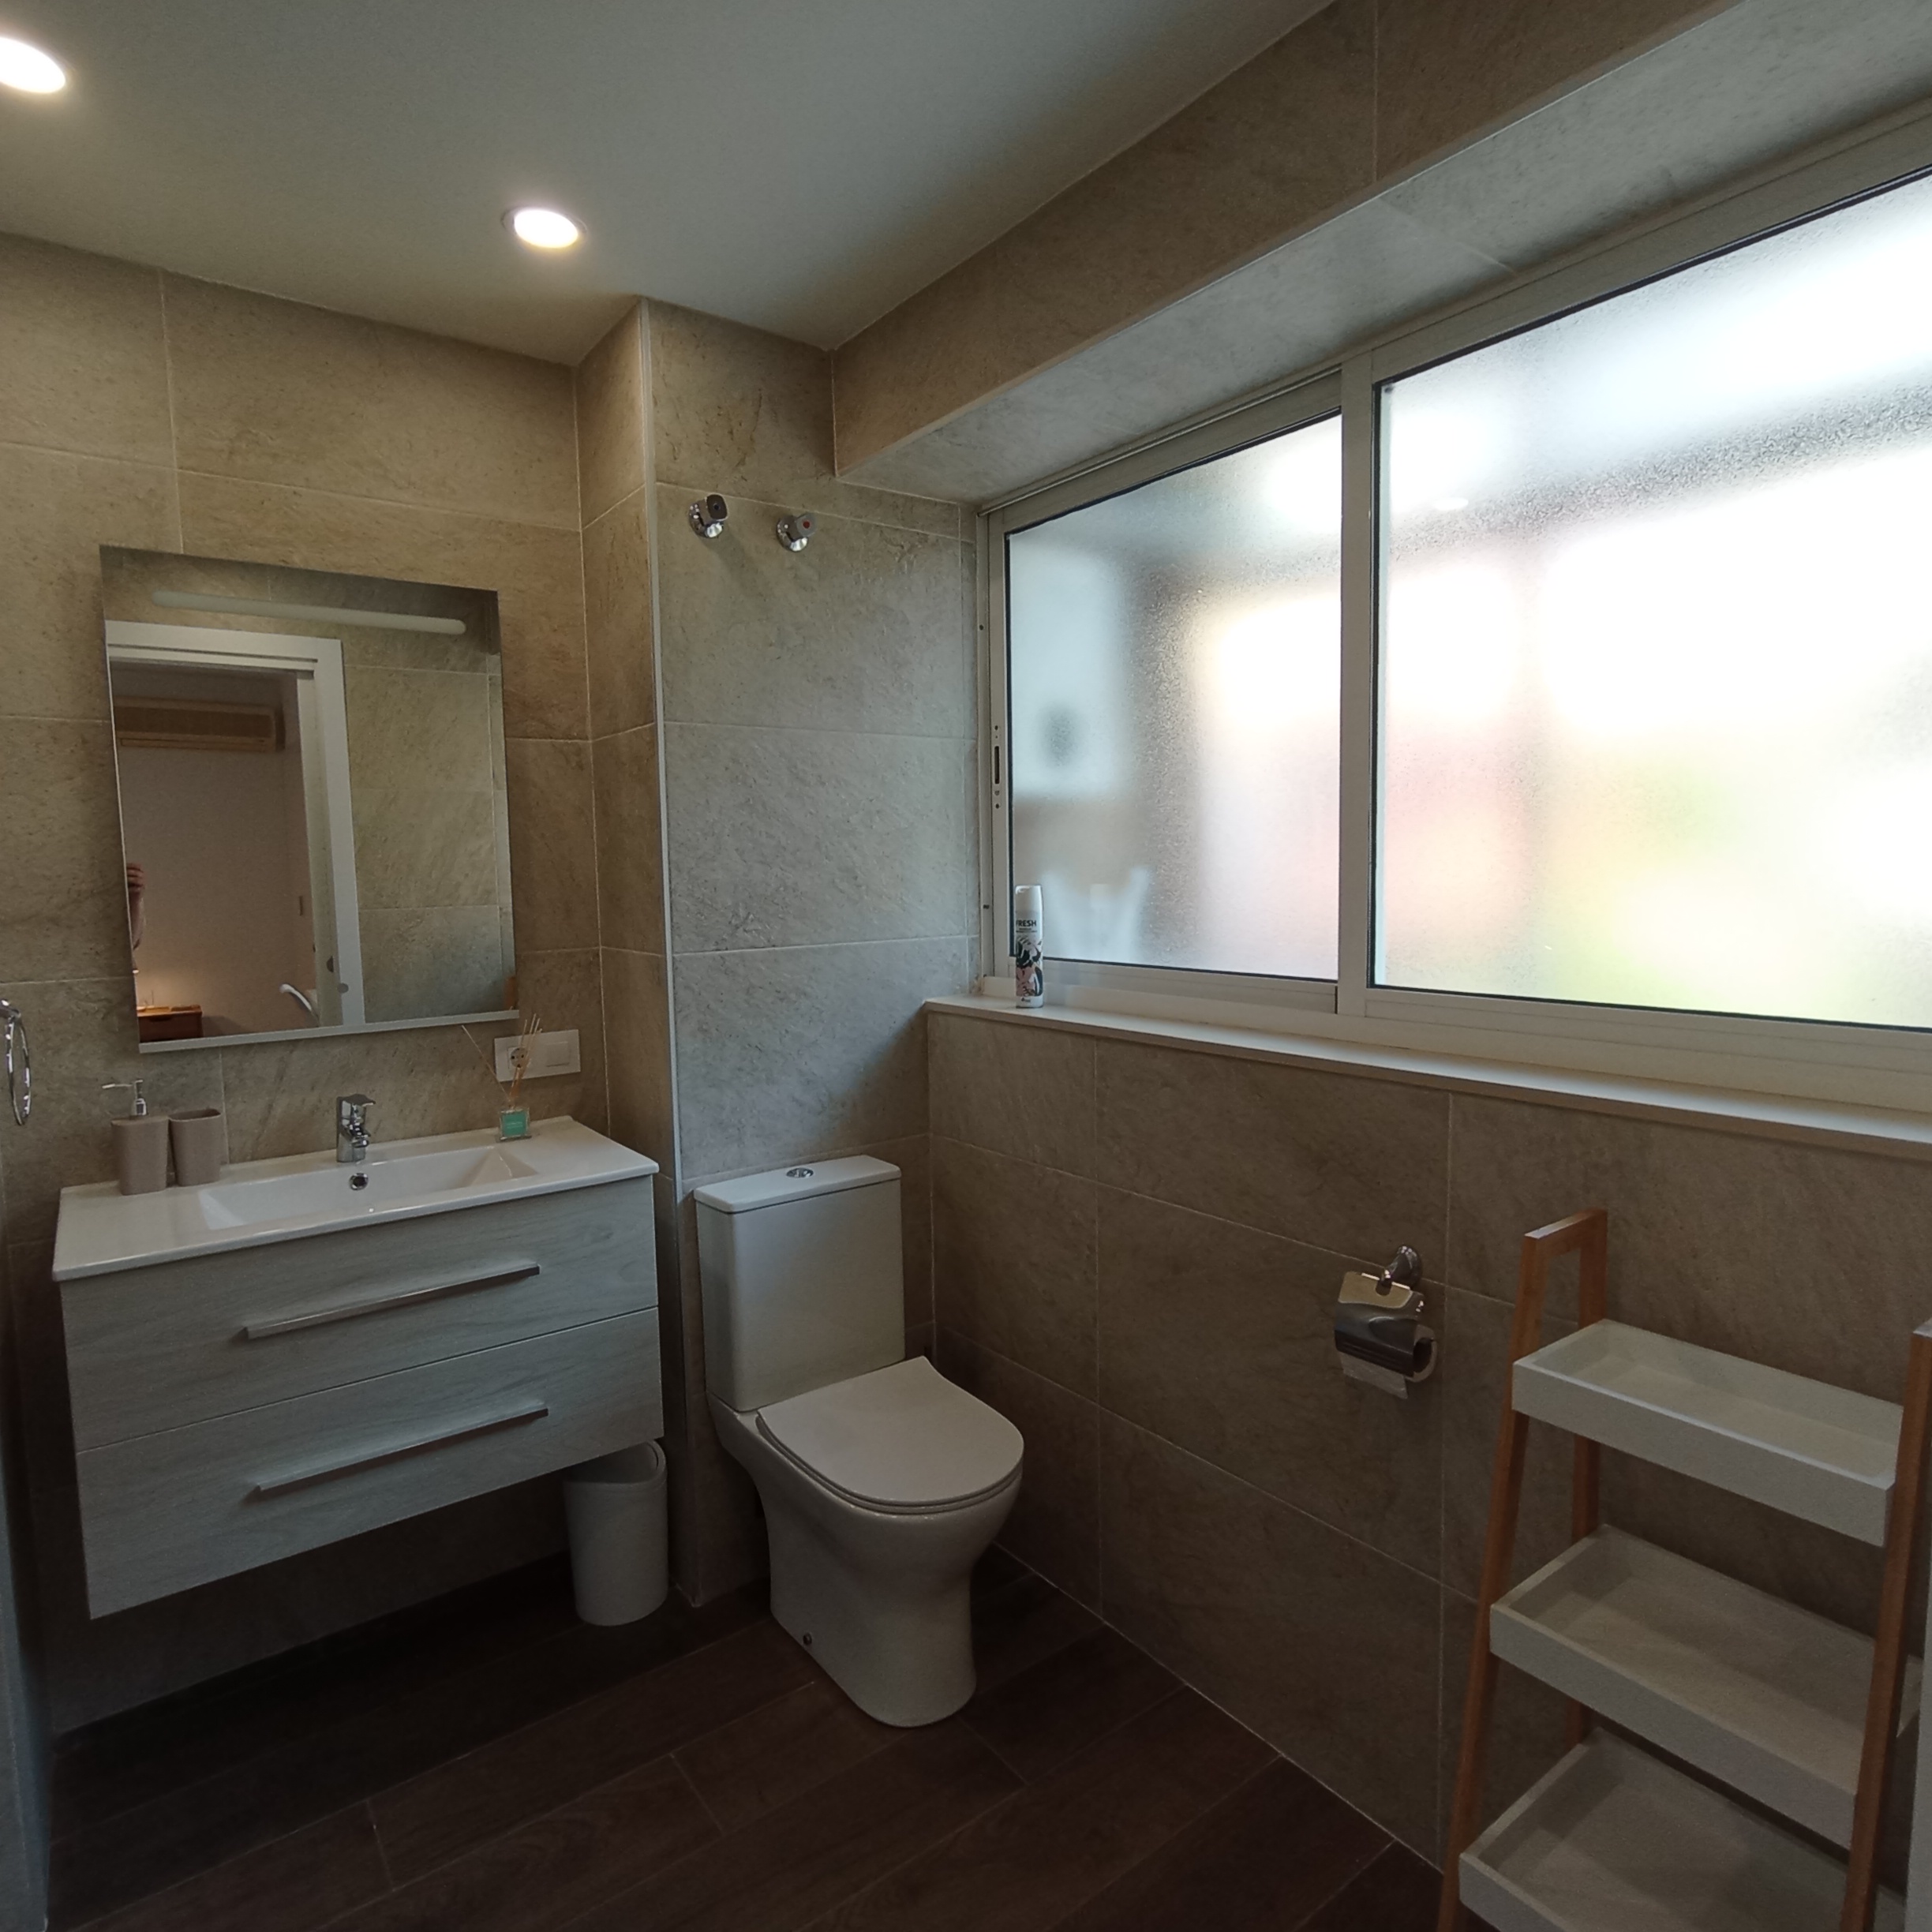 Trafalgar - 3 Bedroom apartment for rent in Valencia bathroom 4